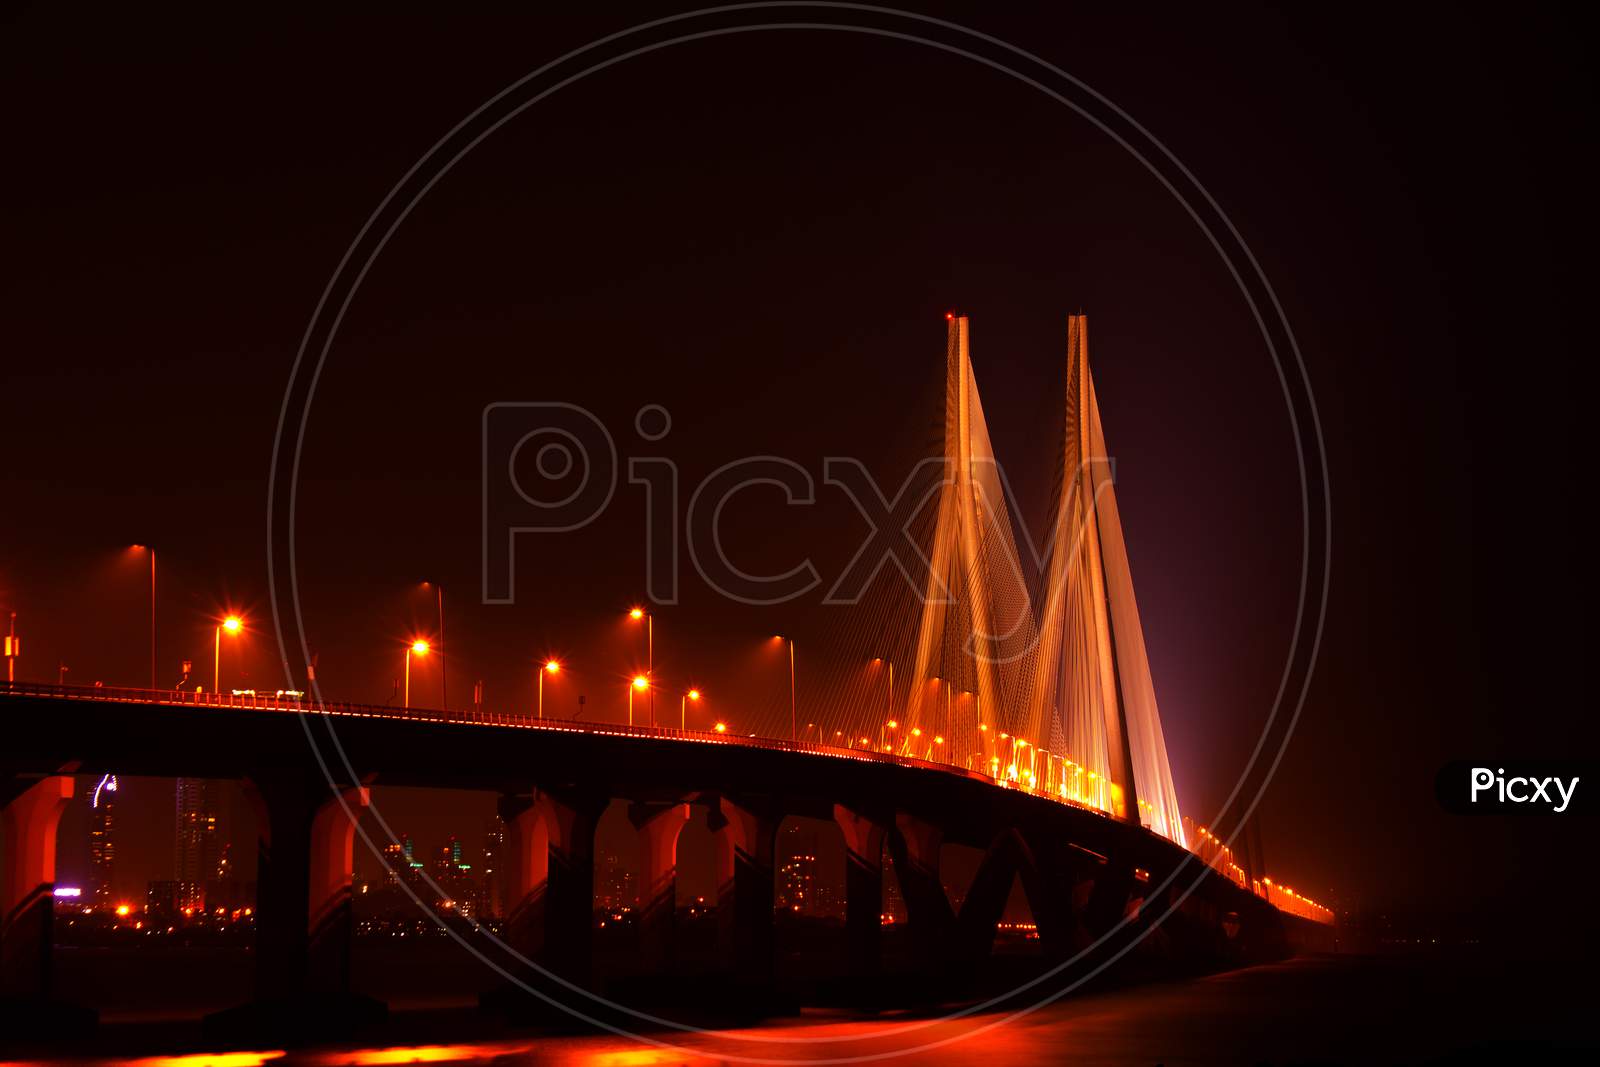 Bandra–Worli Sea Link Bridge in Mumbai